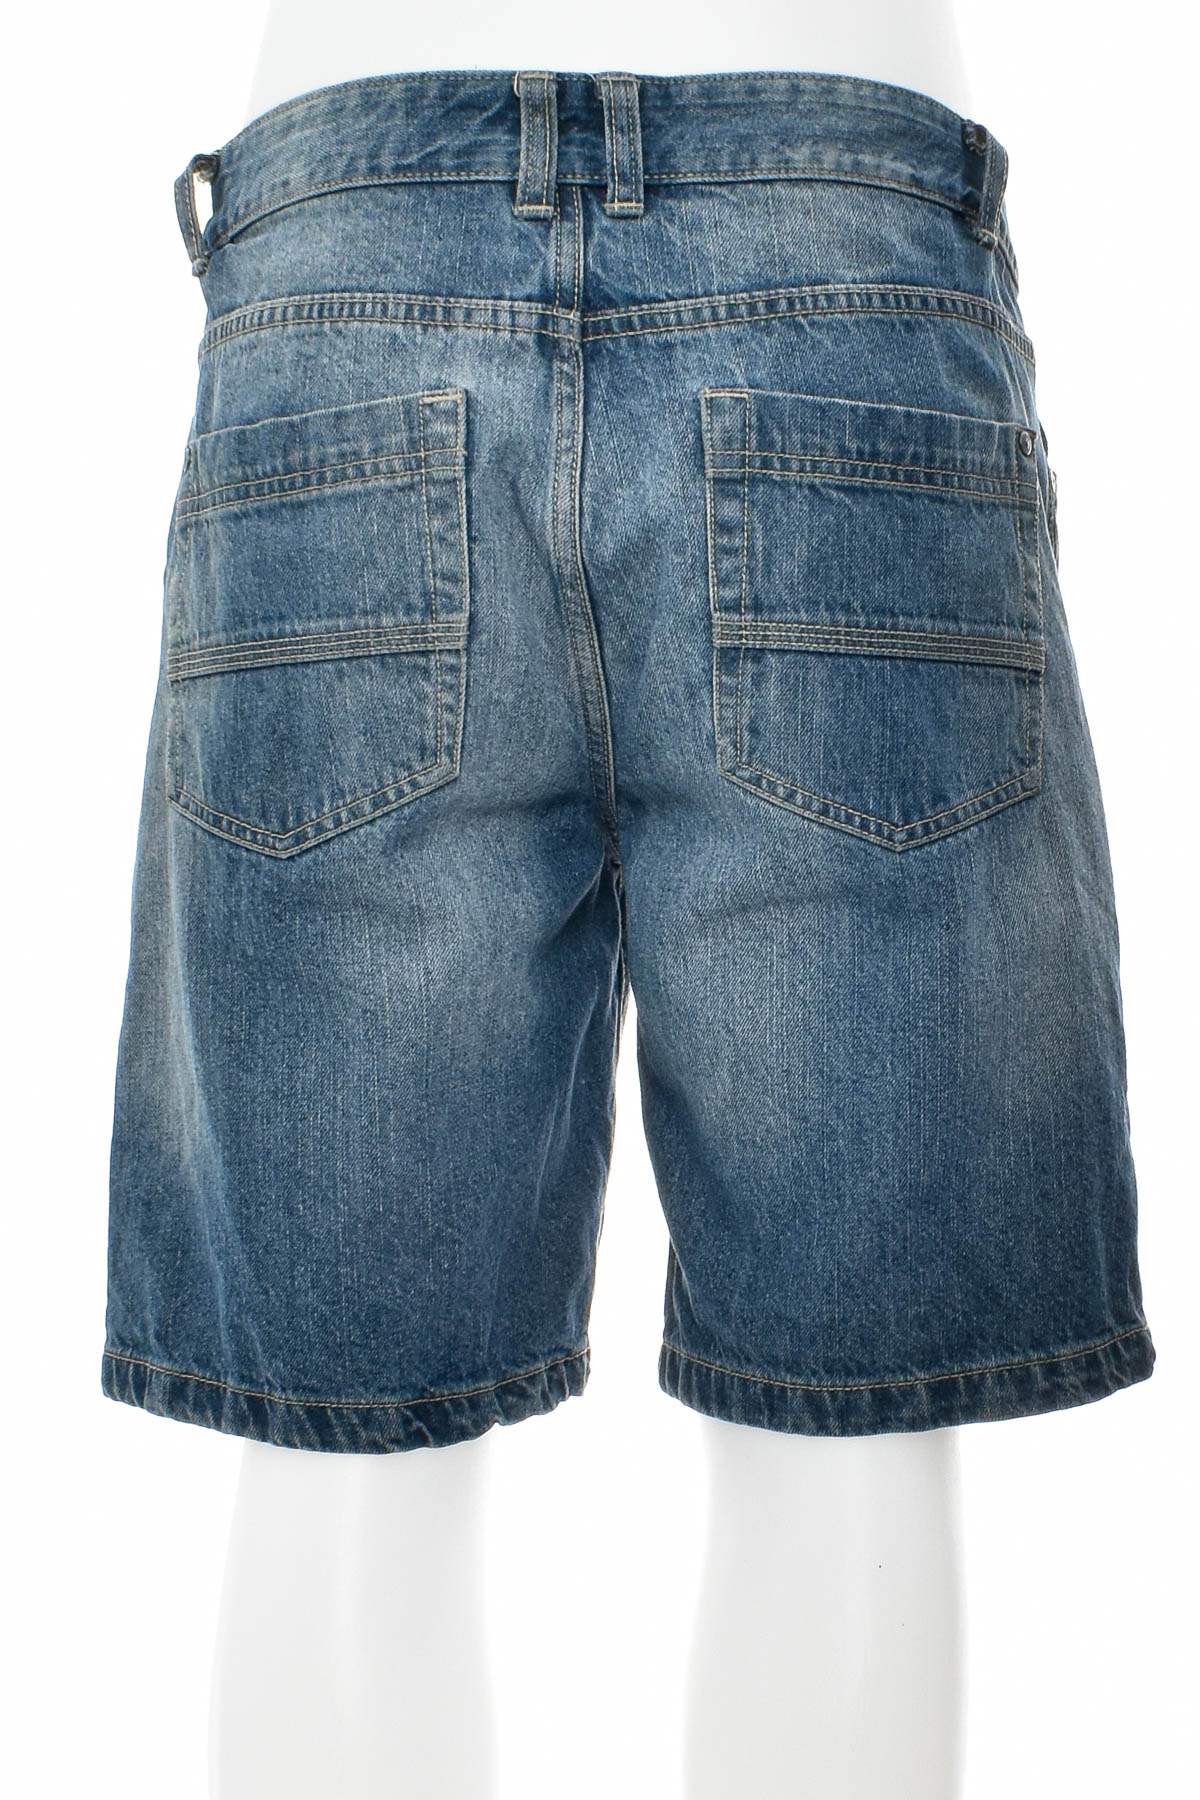 Men's shorts - LIVERGY - 1